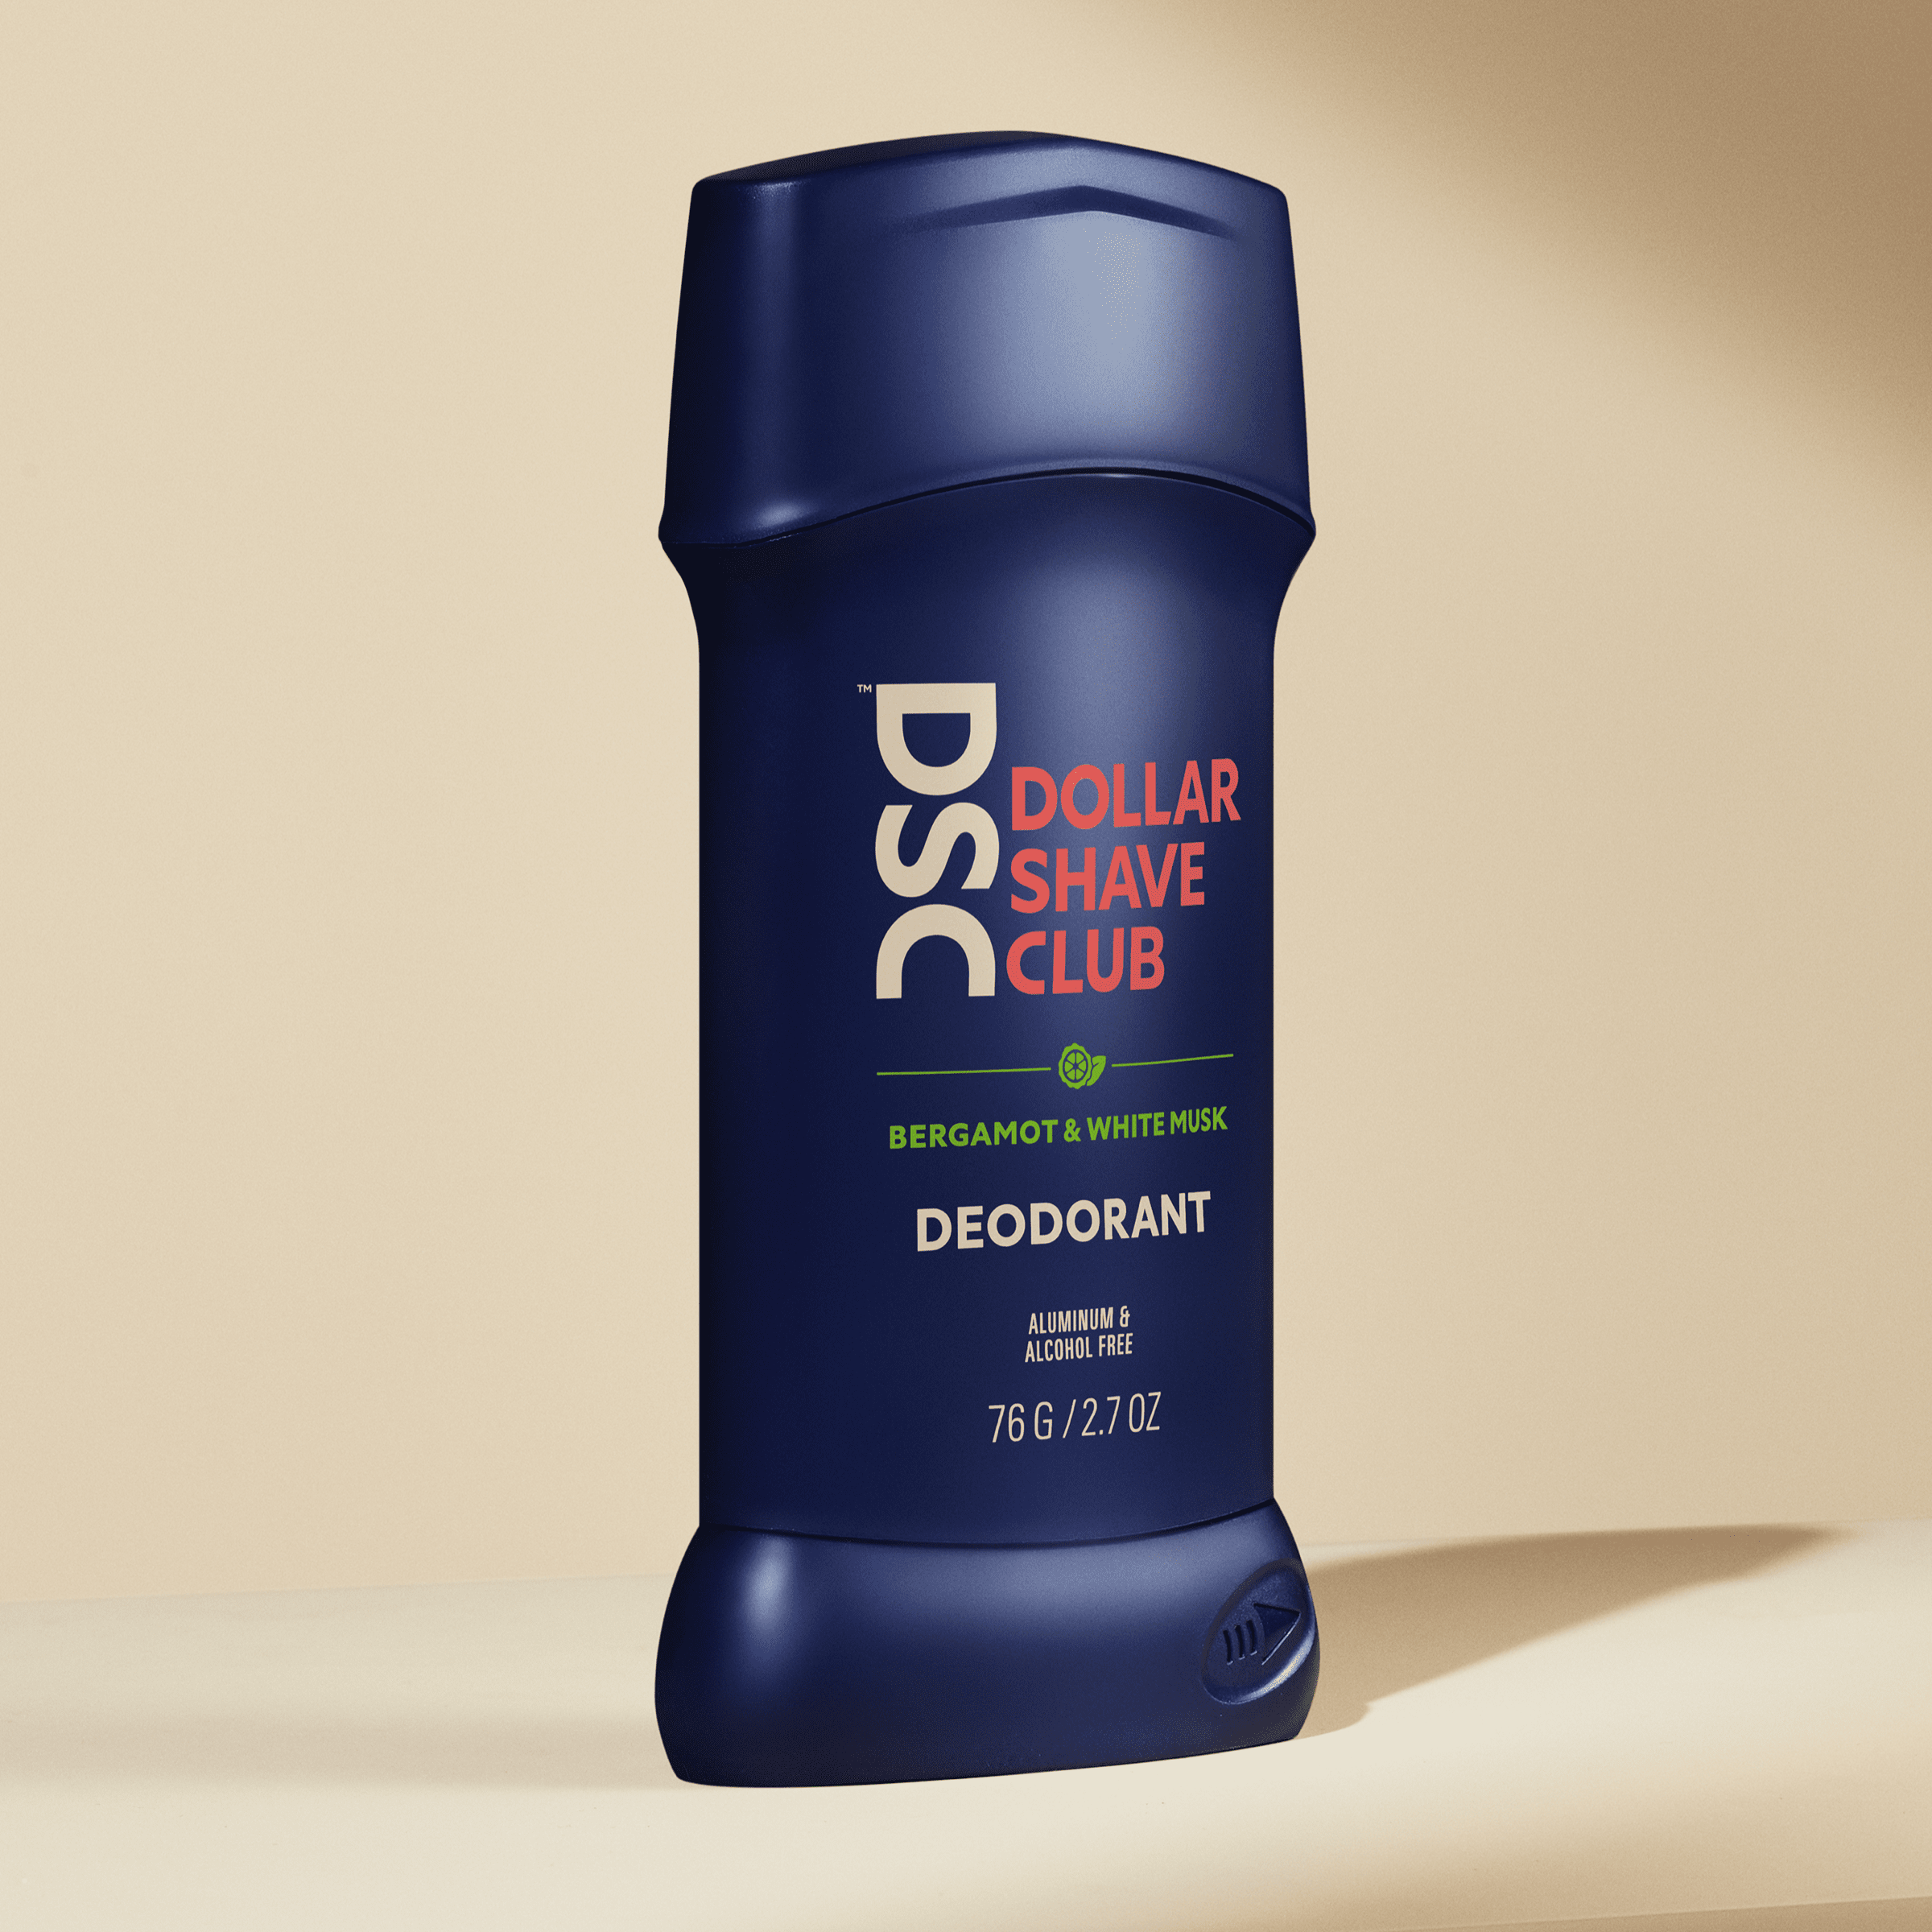 Dollar Shave Club Deodorant Bergamot White Musk against tan backdrop.